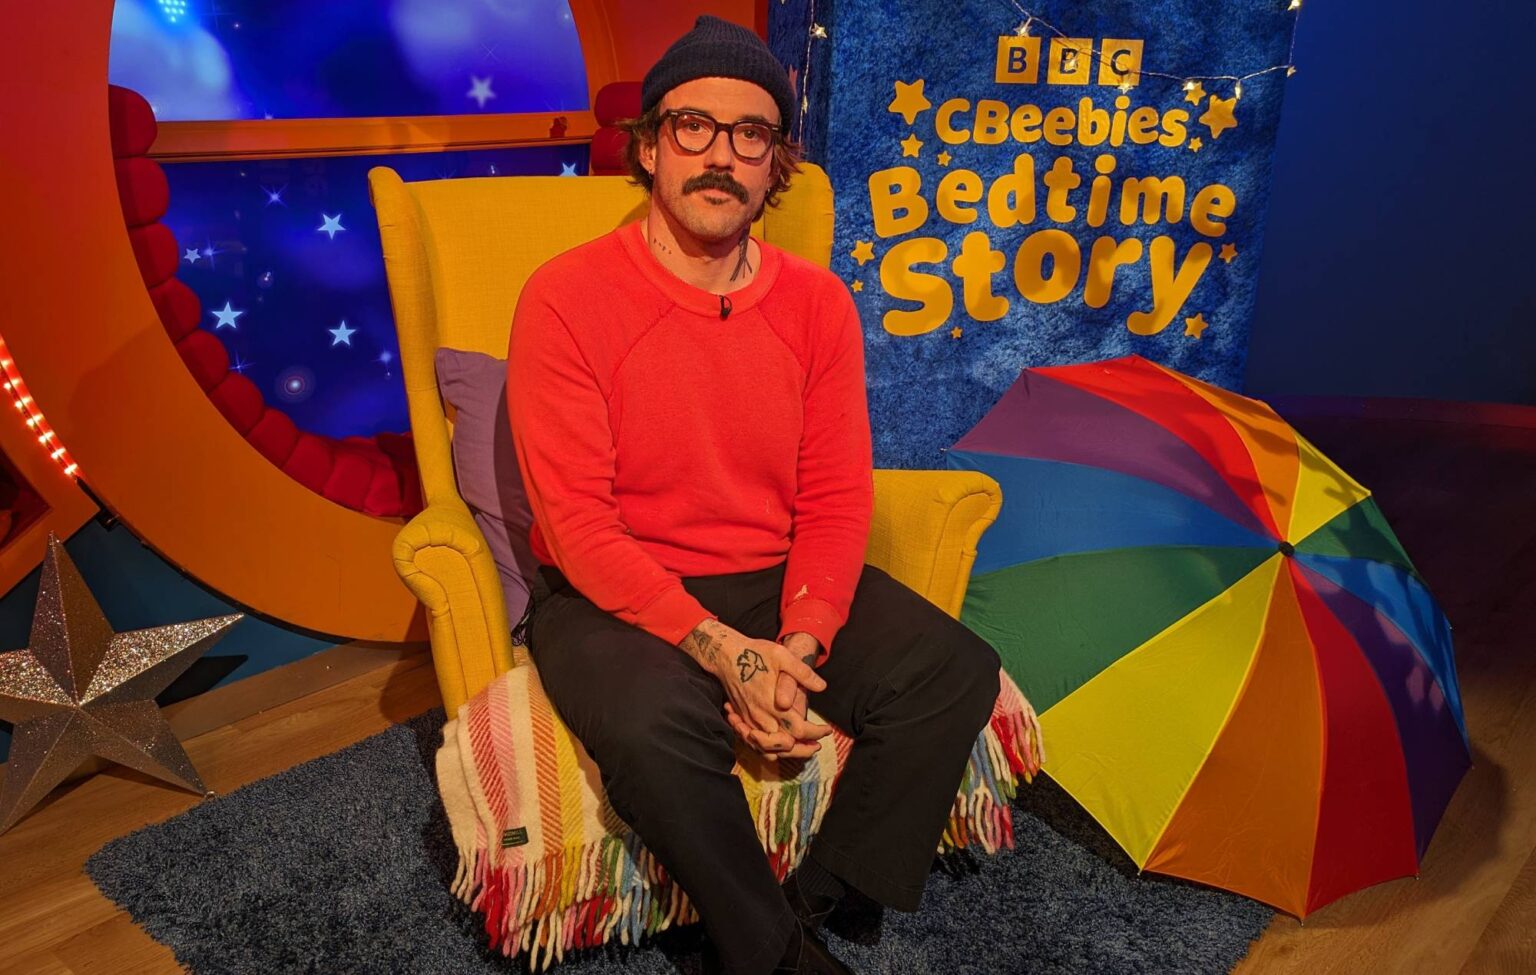 Joe Talbot de Idles lerá 'Bedtime Story' de CBeebies